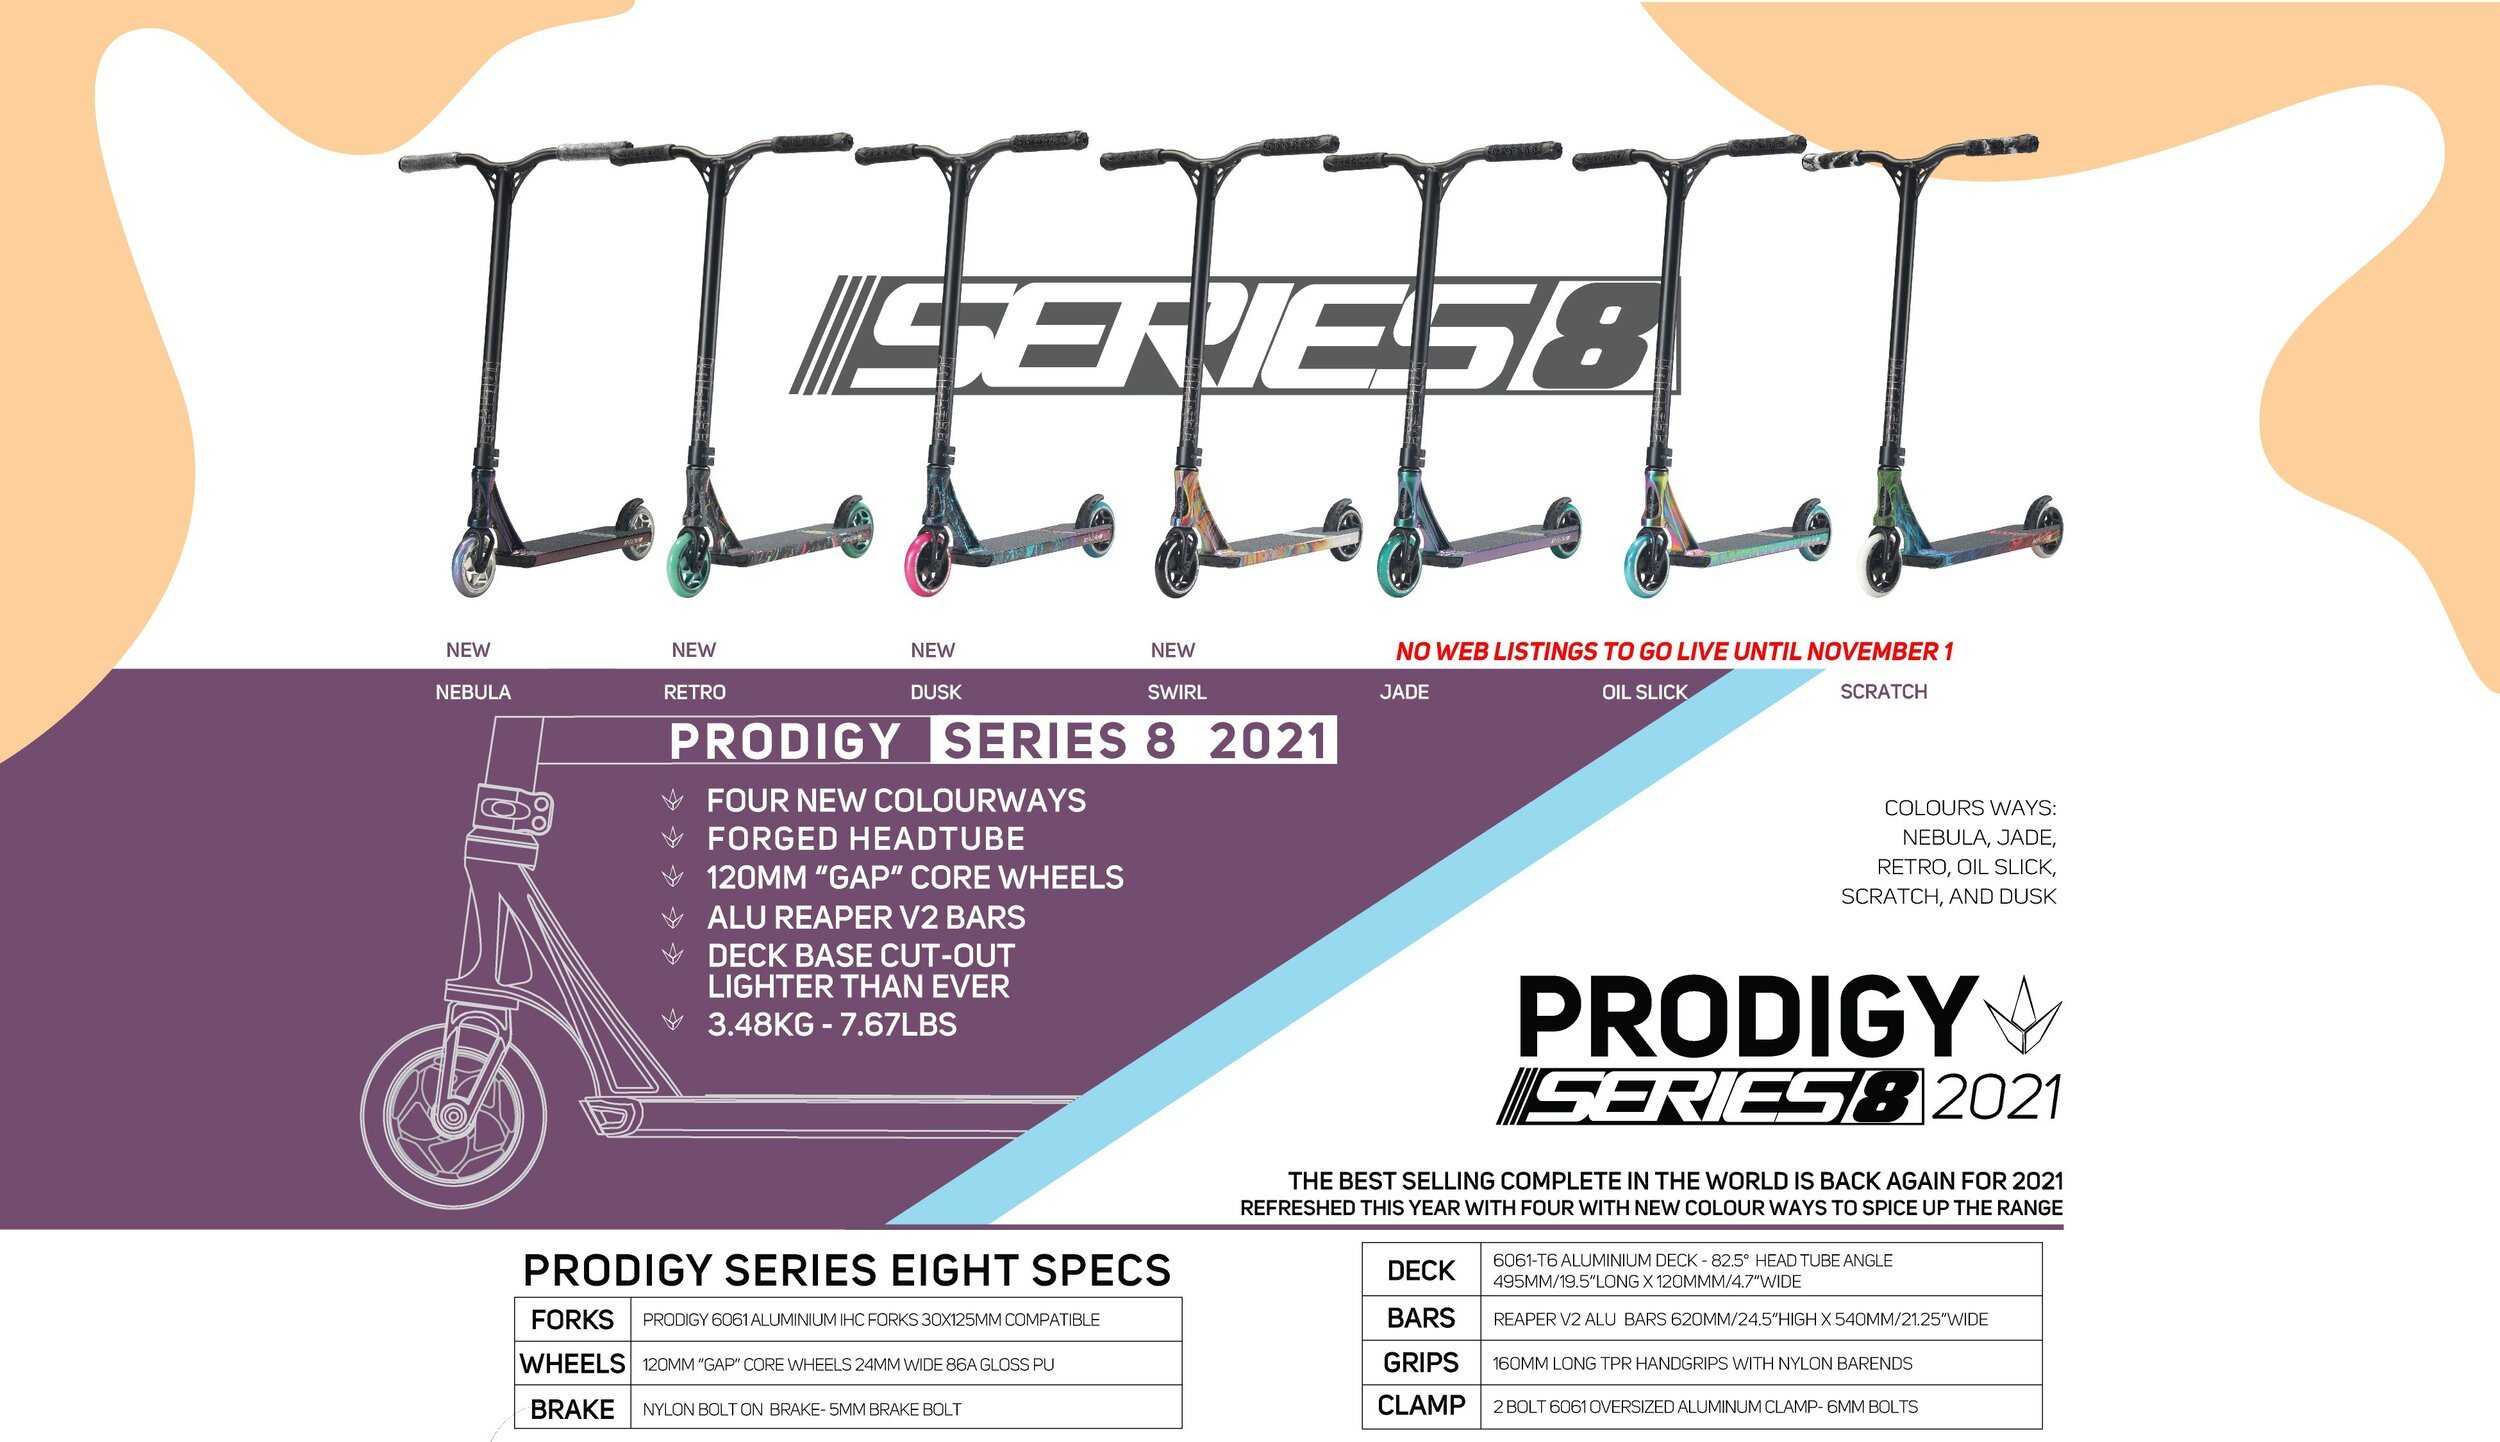 New Prodigy S8 2021 Line up